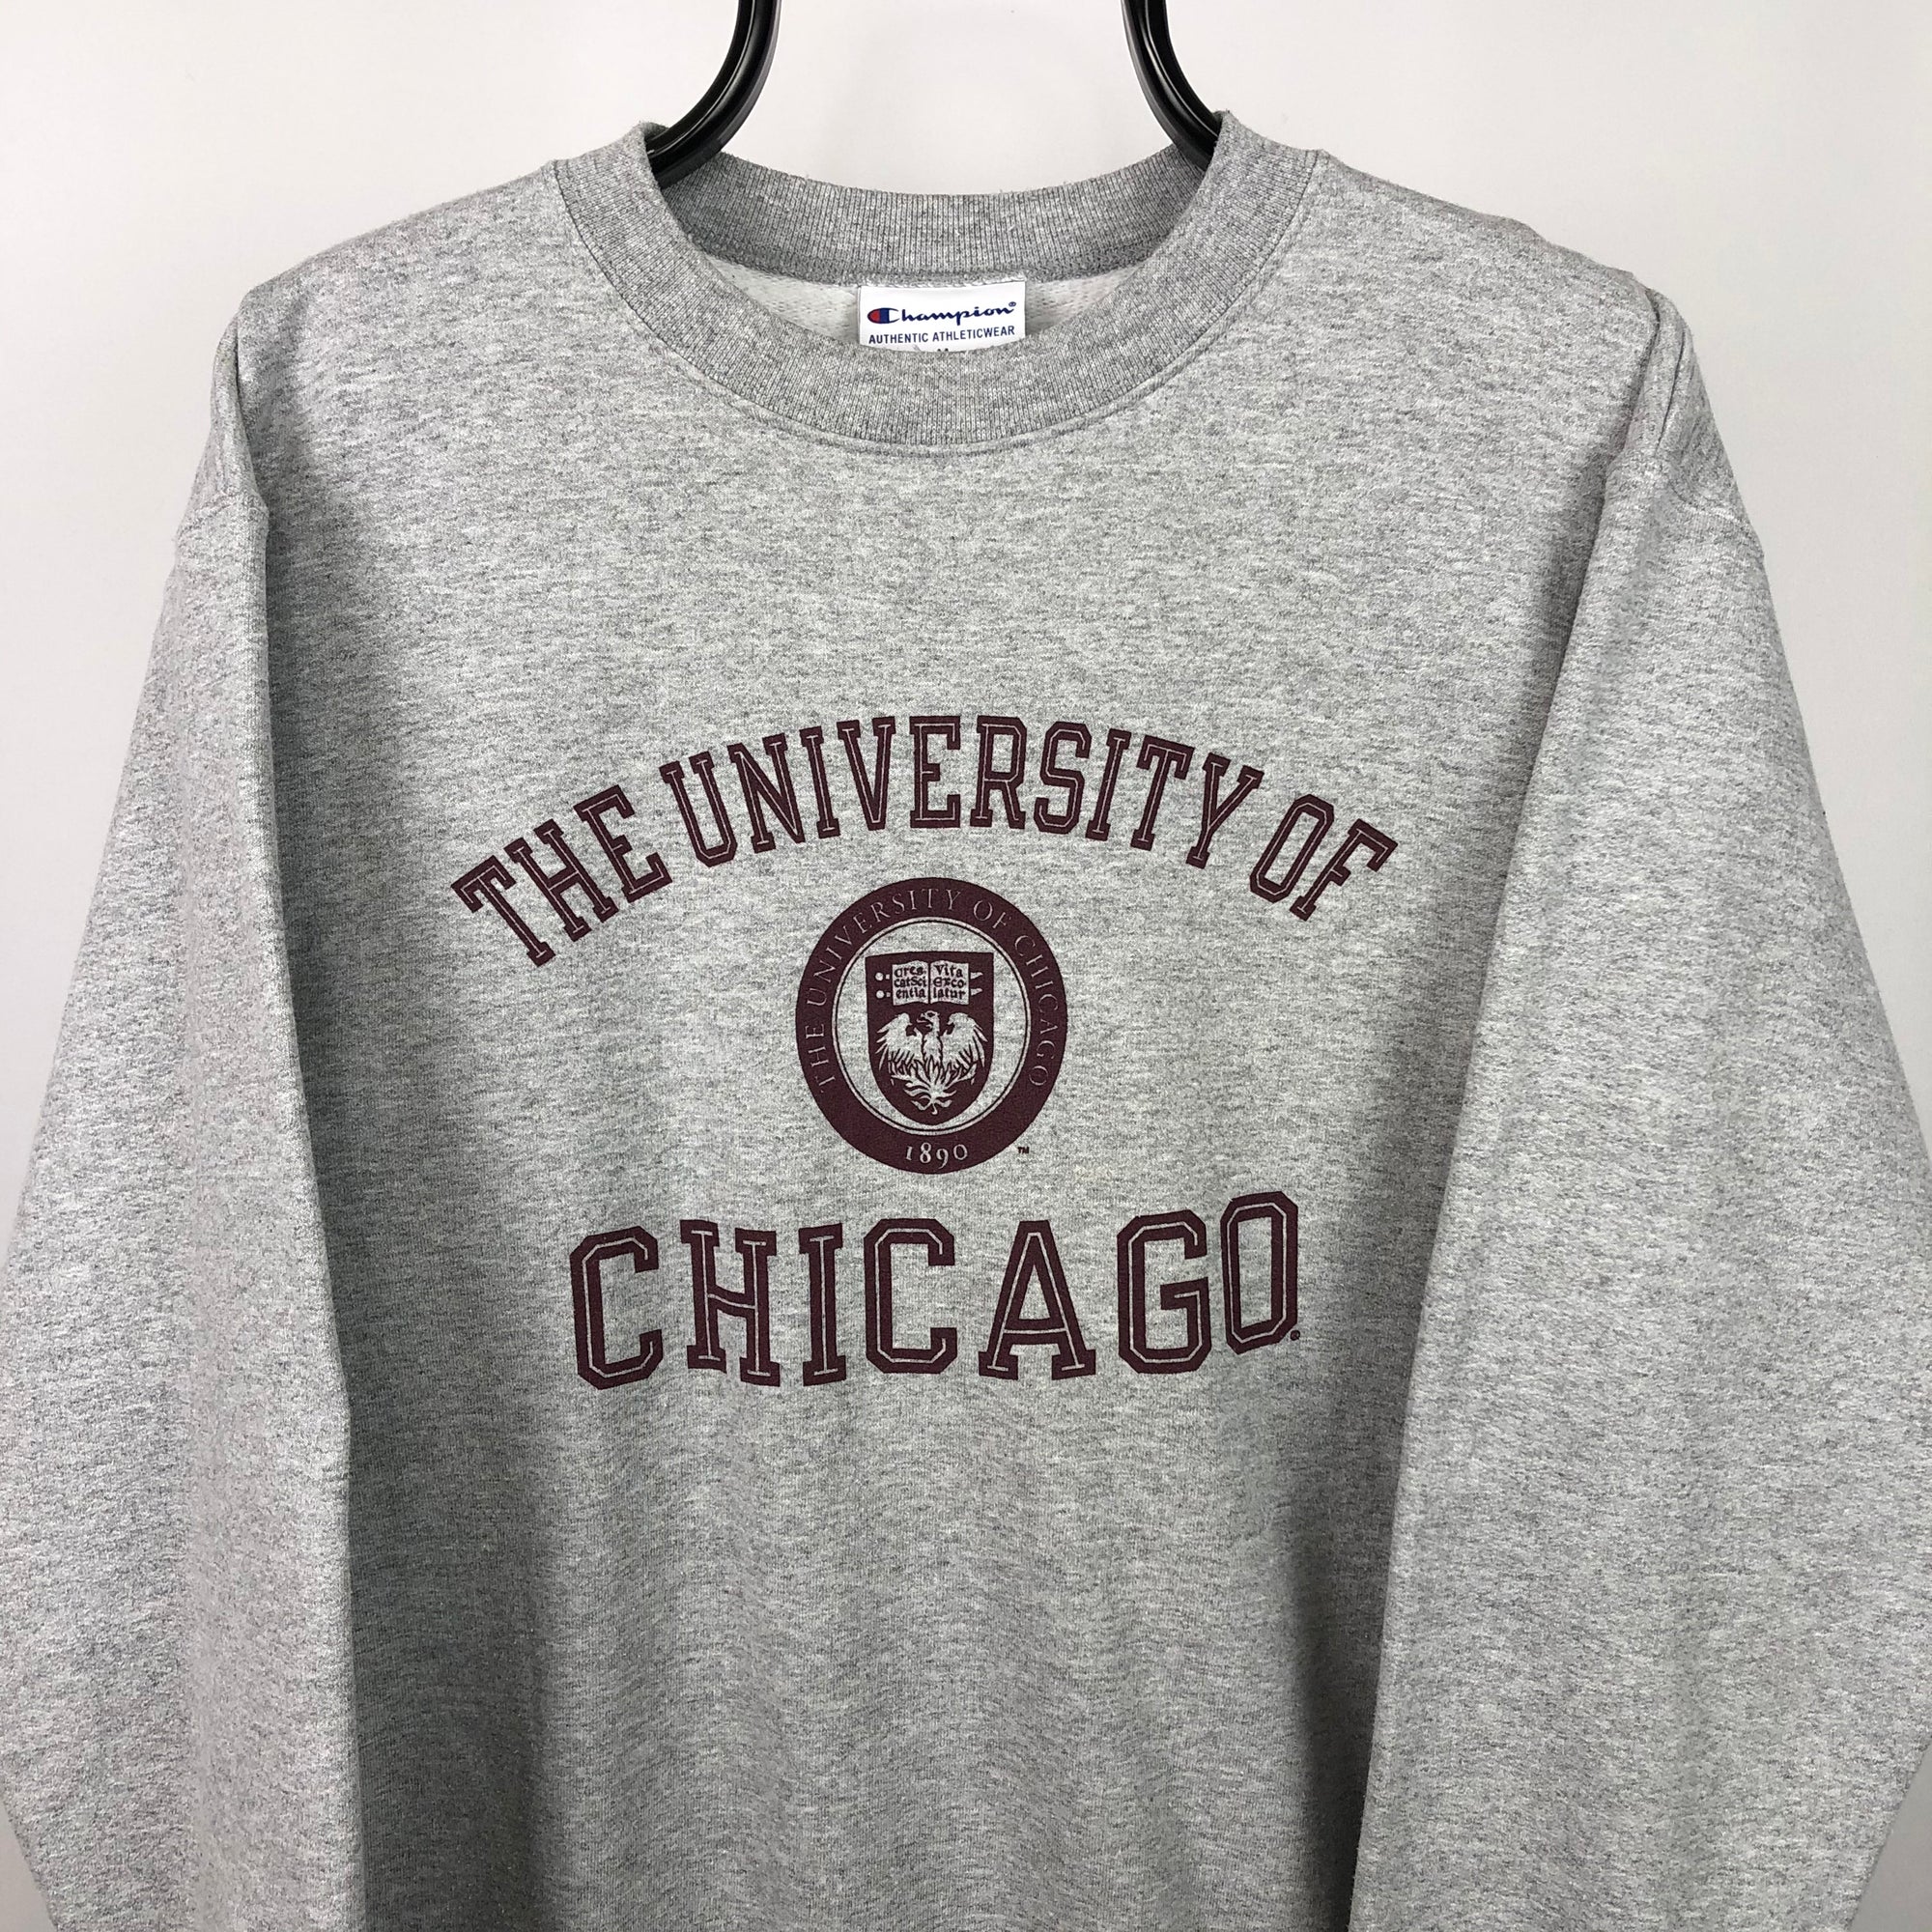 Vintage Champion 'Chicago' Sweatshirt in Grey/Burgundy - Men's Medium/Women's Large